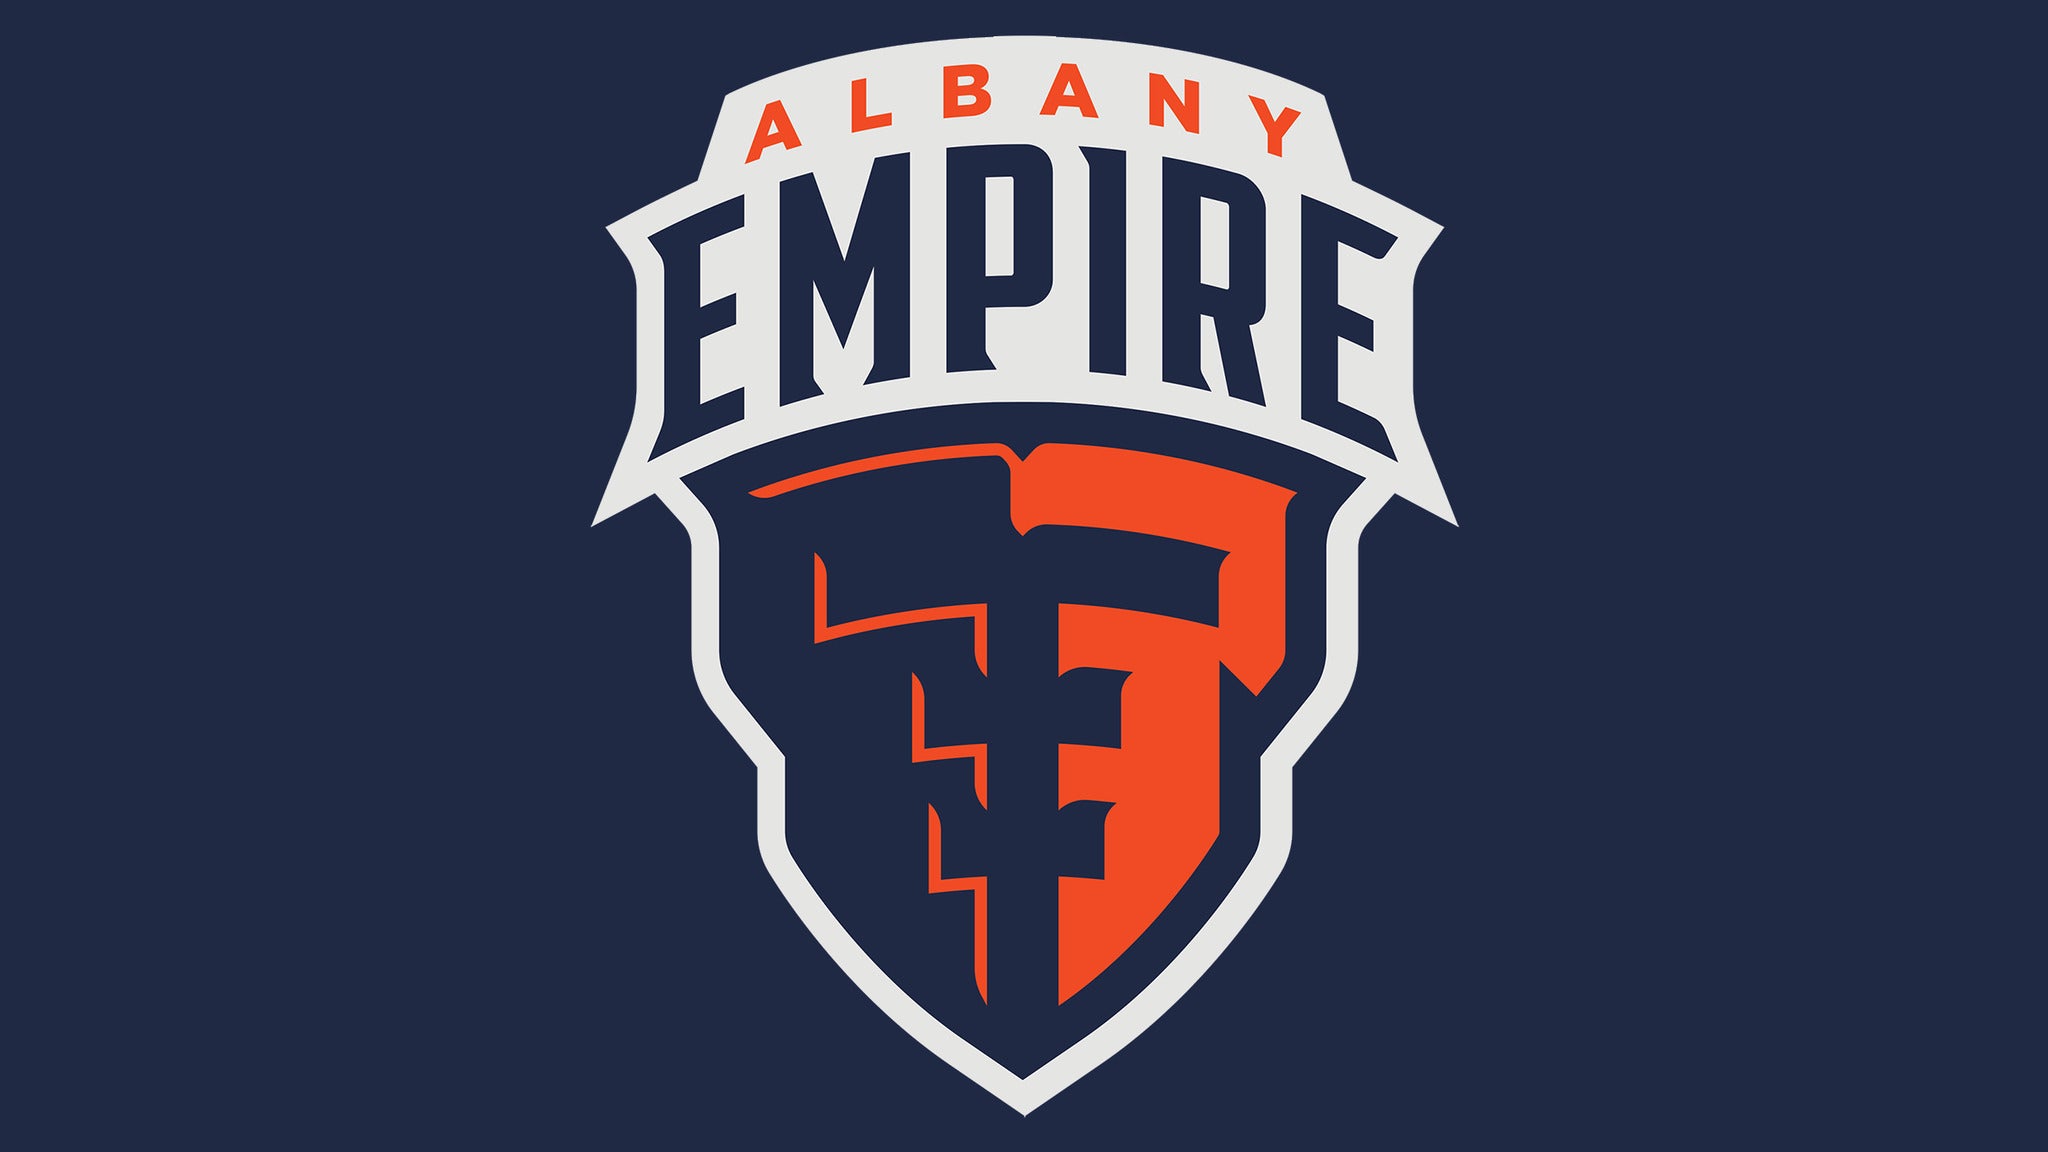 Albany Empire vs. Columbus Lions